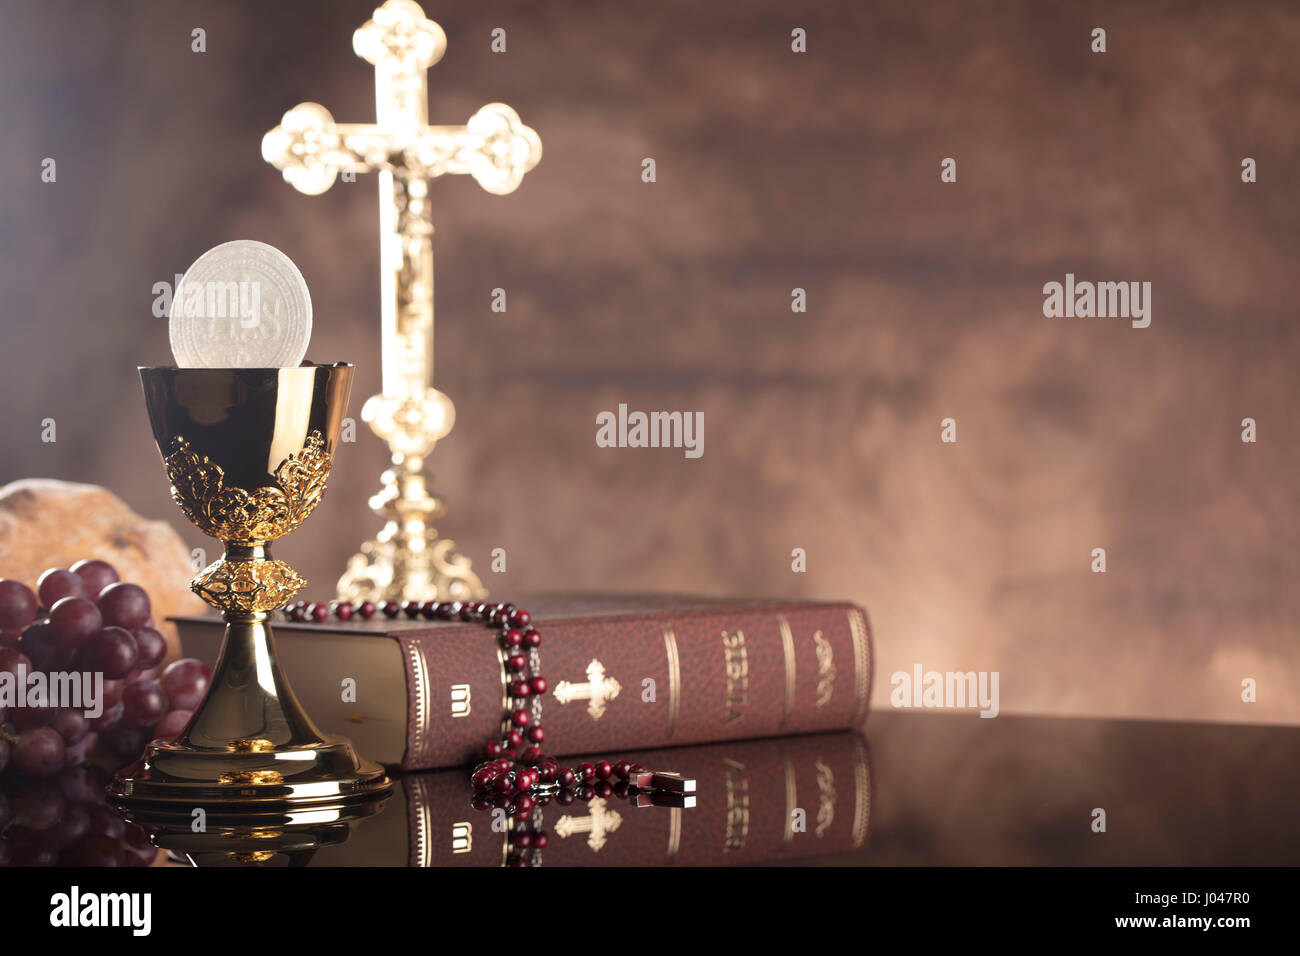 Religious Desktop Backgrounds (67+ pictures)